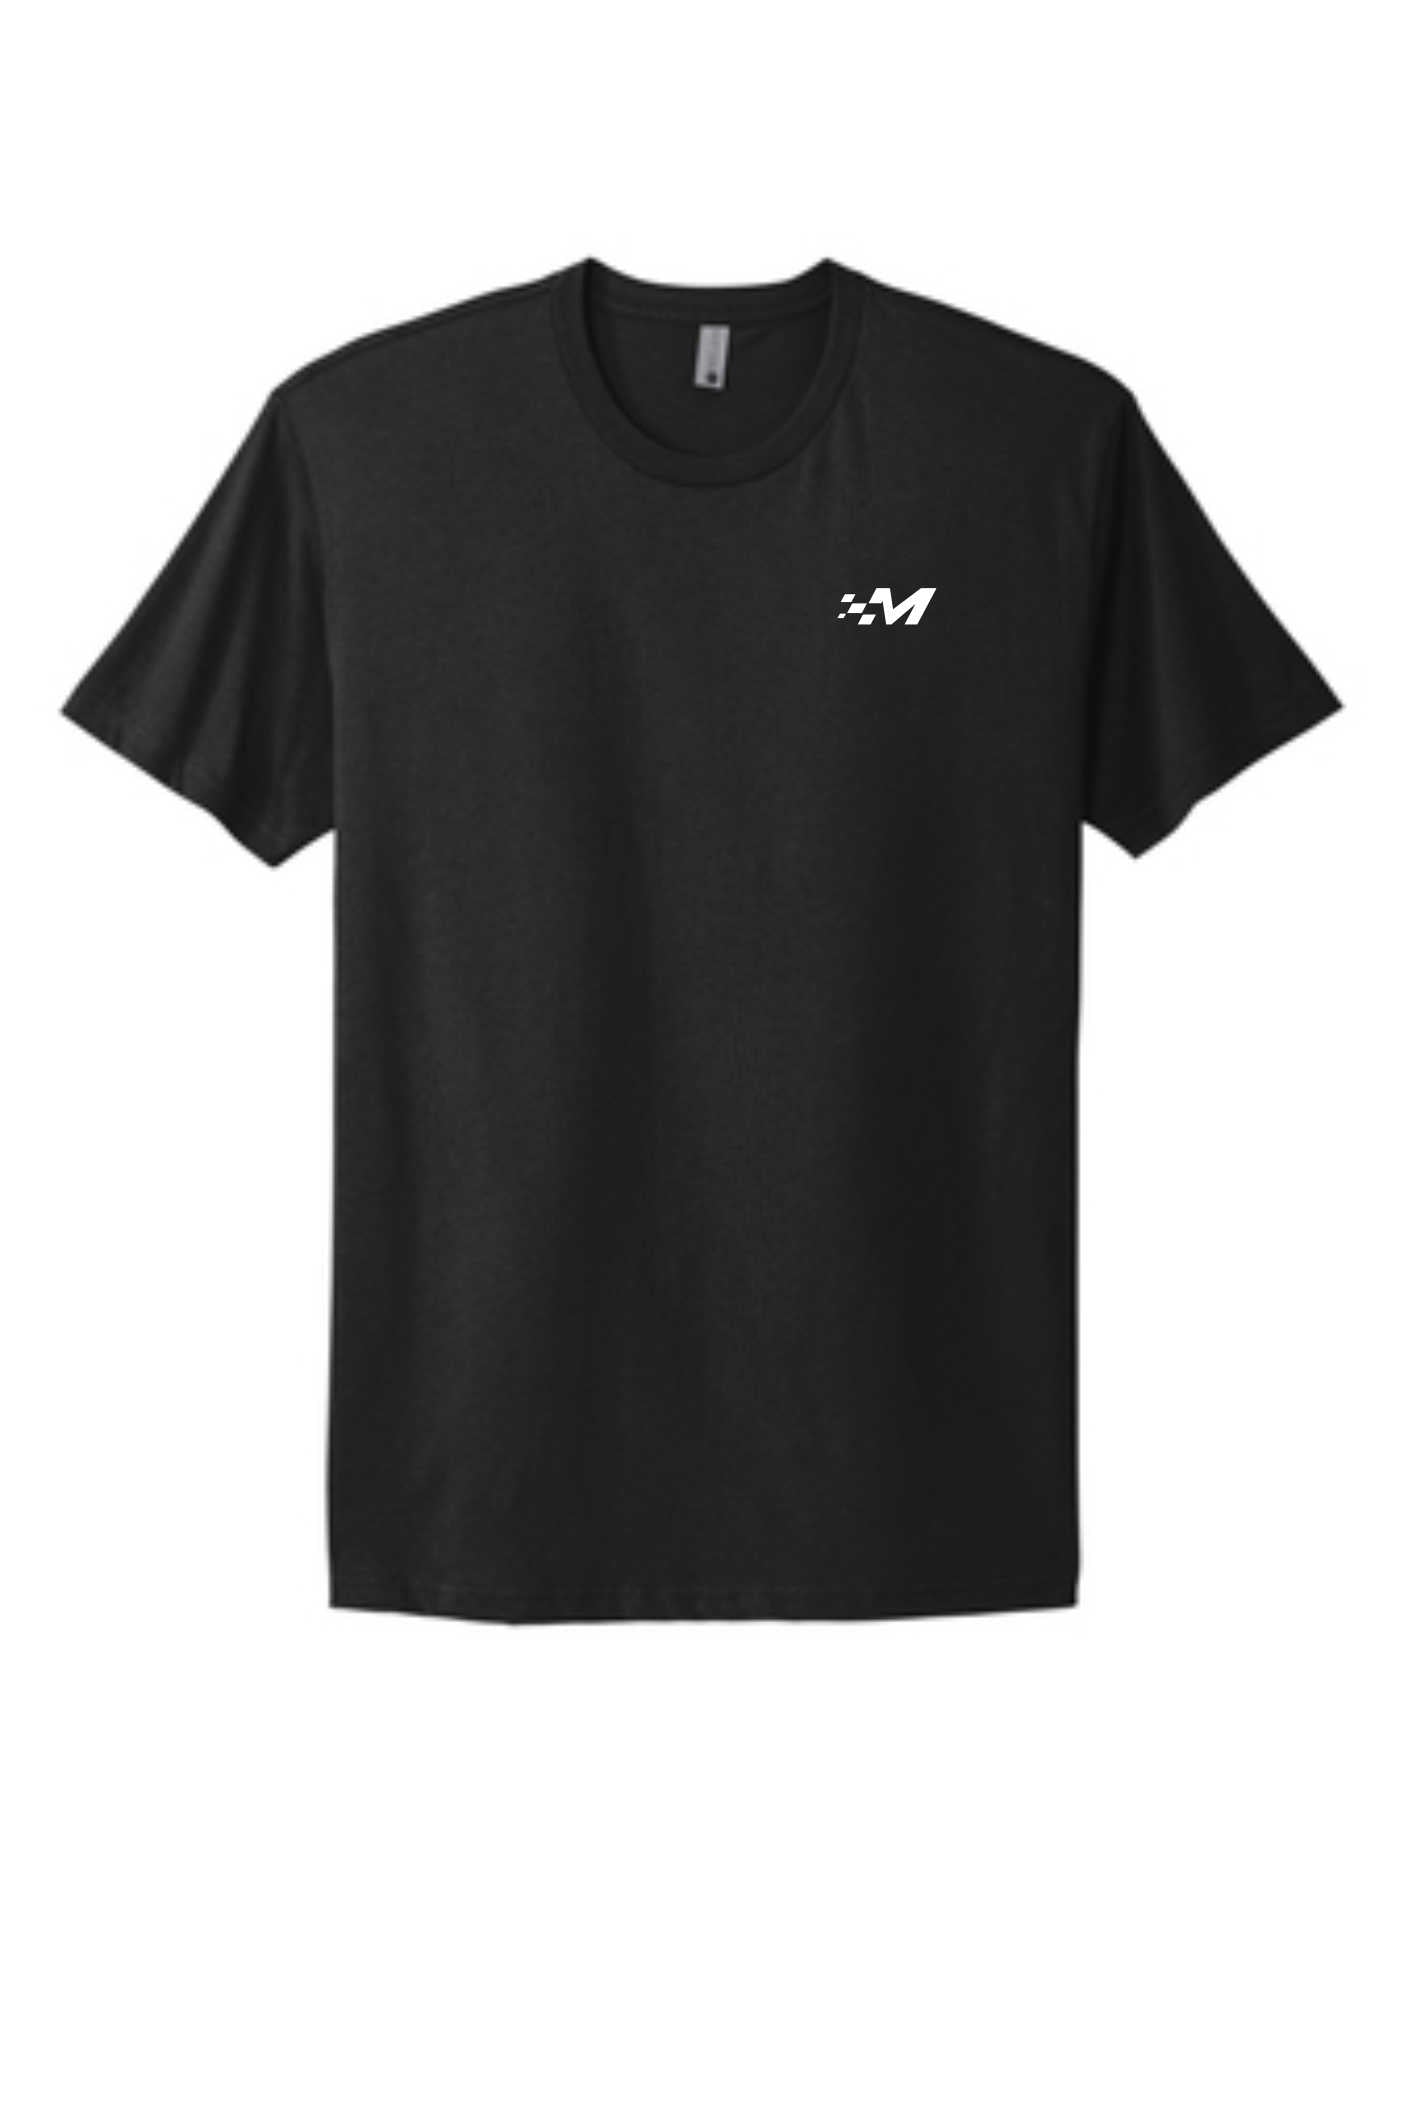 E88 "Wheels" - Short Sleeve T-Shirt - Black